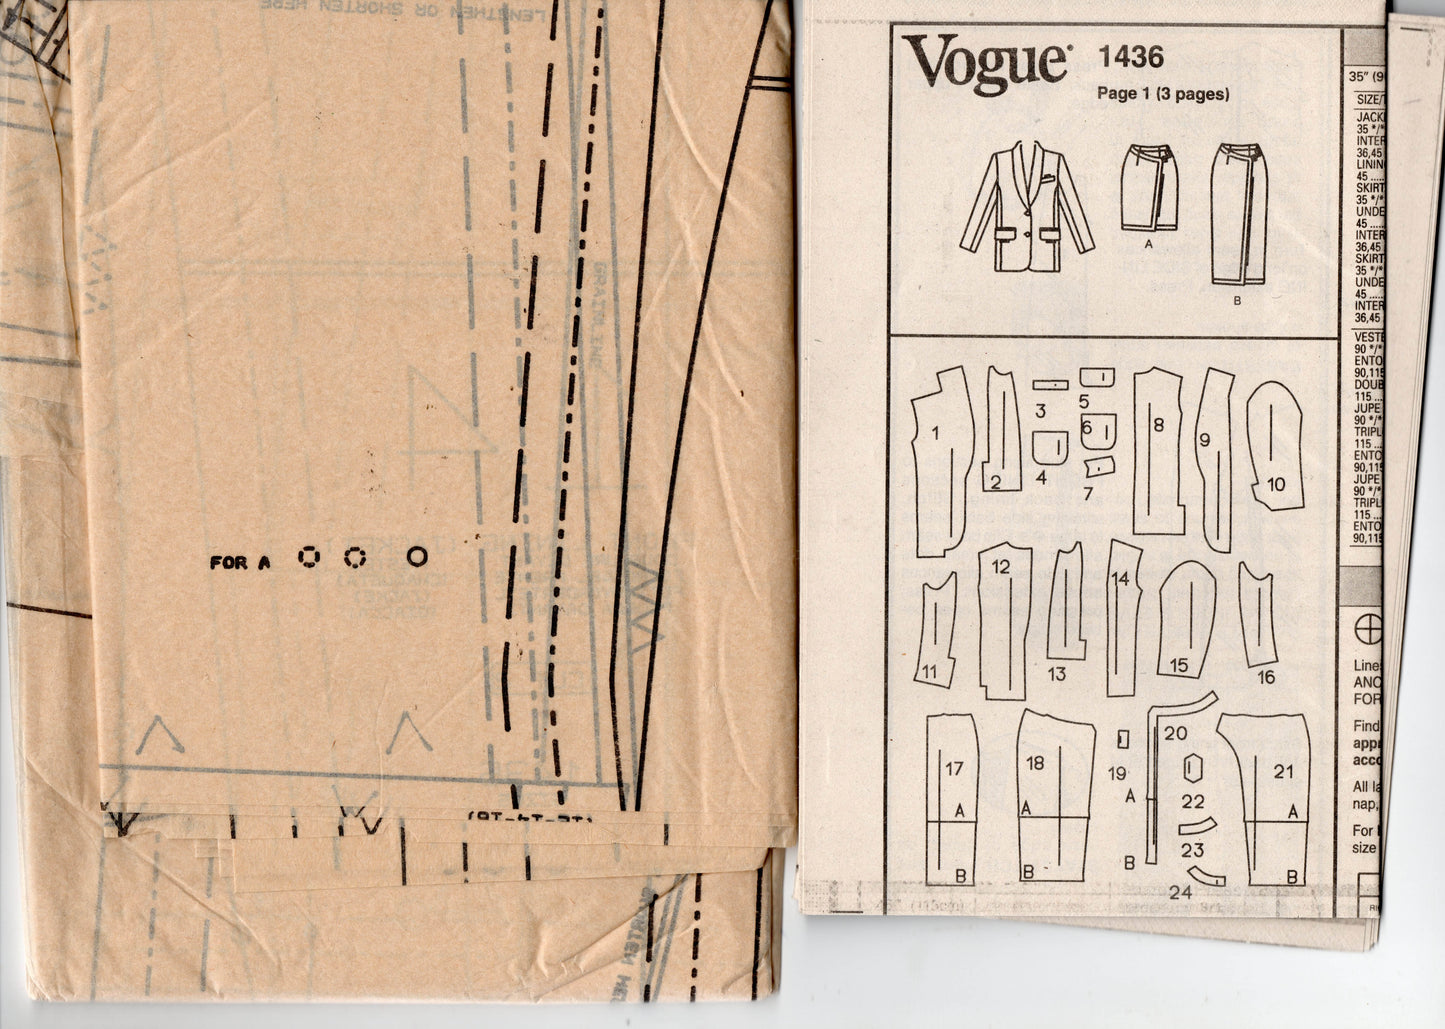 Vogue American Designer 1436 ANNE KLEIN II Womens Long Jacket & Wrap Skirt 1990s Vintage Sewing Pattern Size 12 - 16 UNCUT Factory Folded